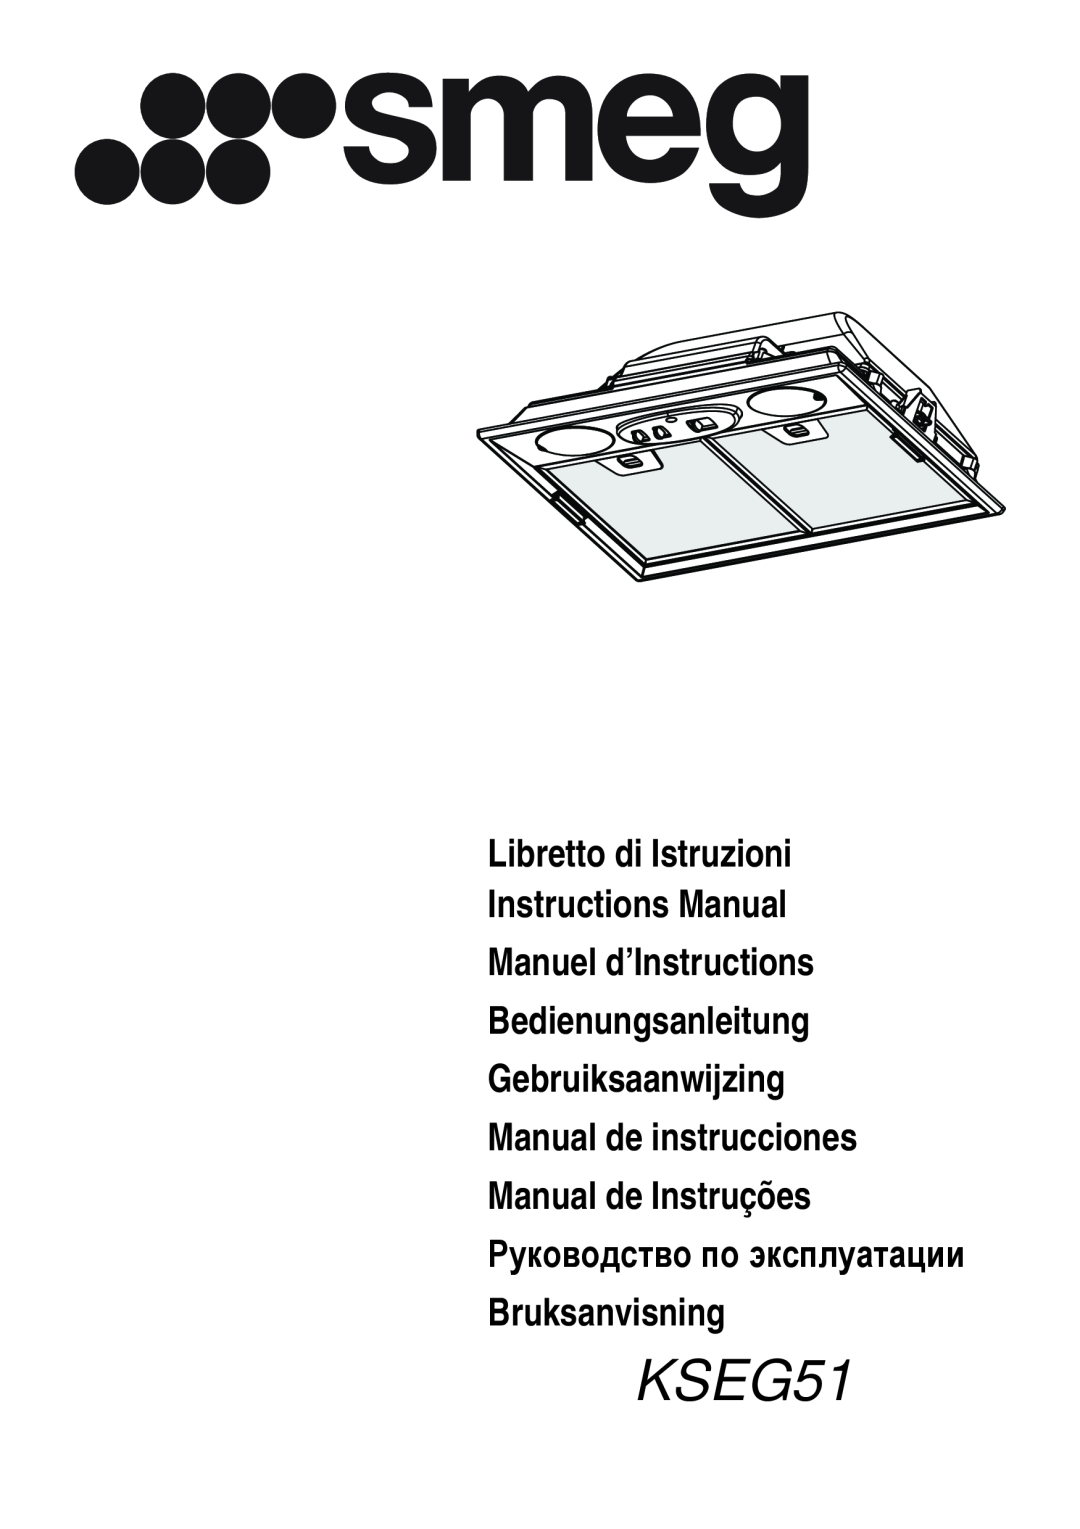 Smeg KSEG51 manual Libretto di Istruzioni Instructions Manual Manuel d’Instructions, Manual de Instruções, Bruksanvisning 